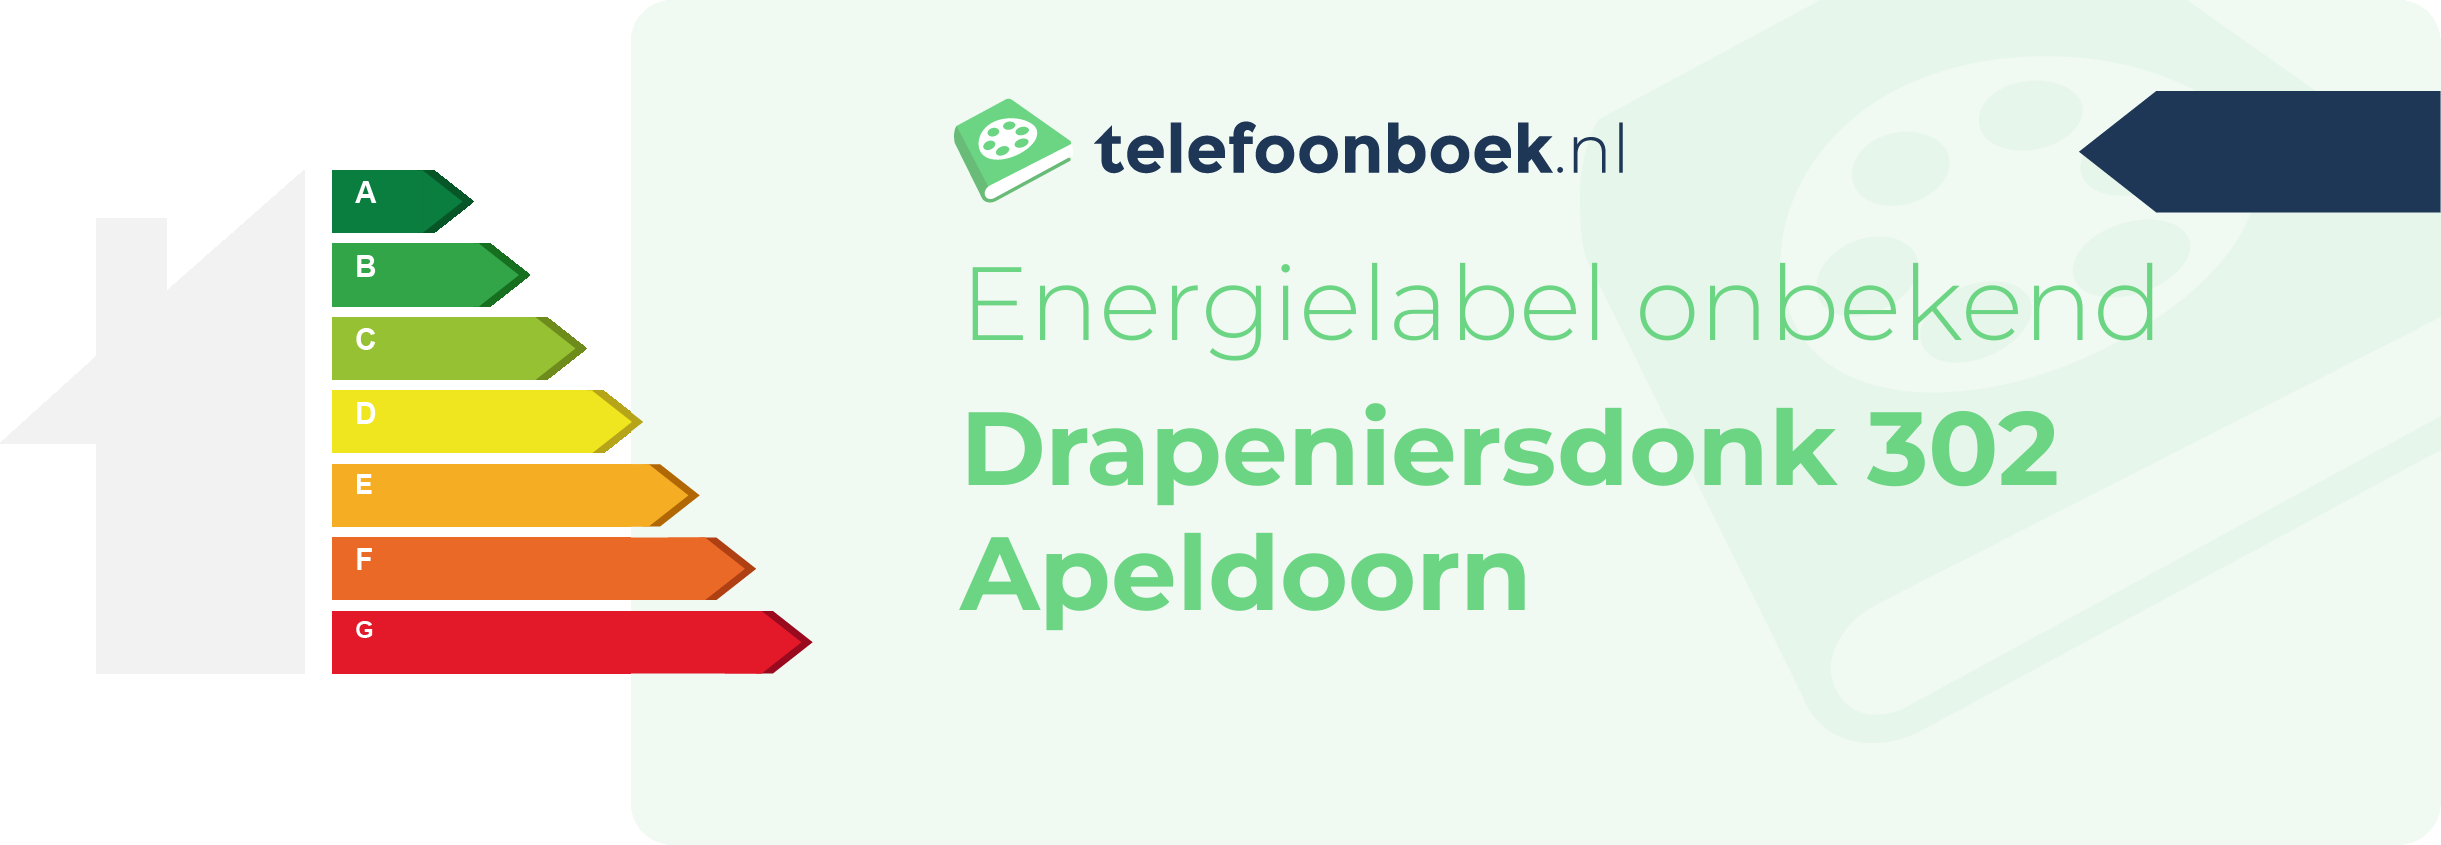 Energielabel Drapeniersdonk 302 Apeldoorn